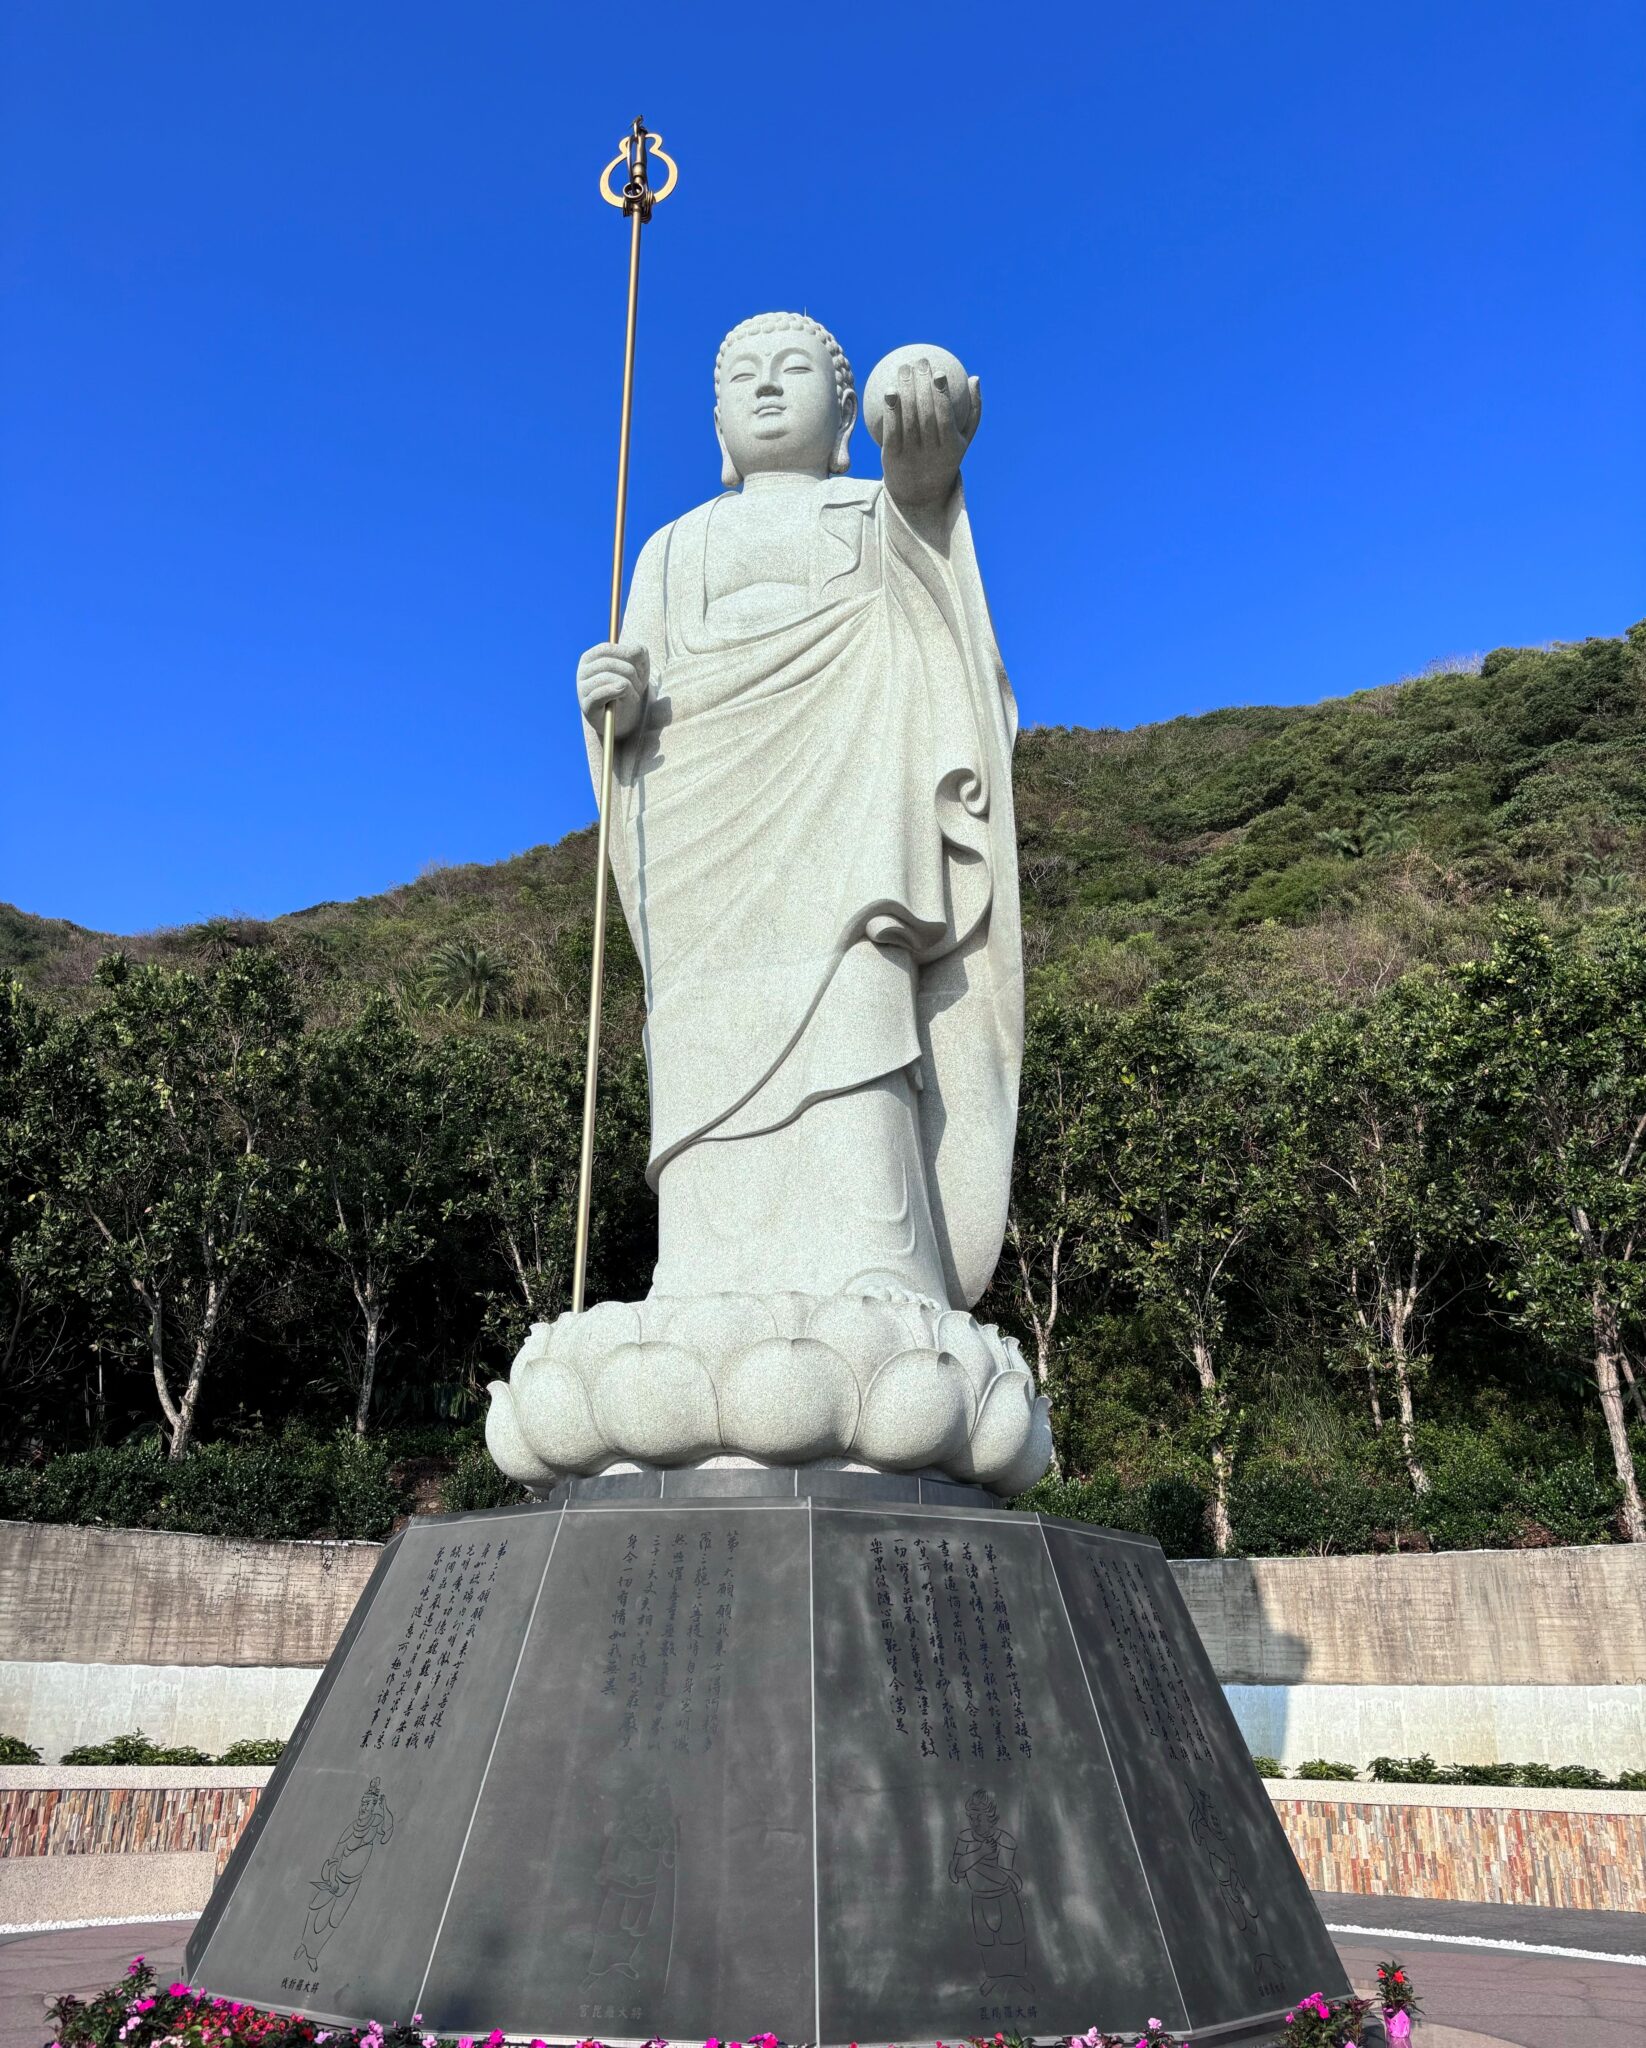 Buddha statue loses head